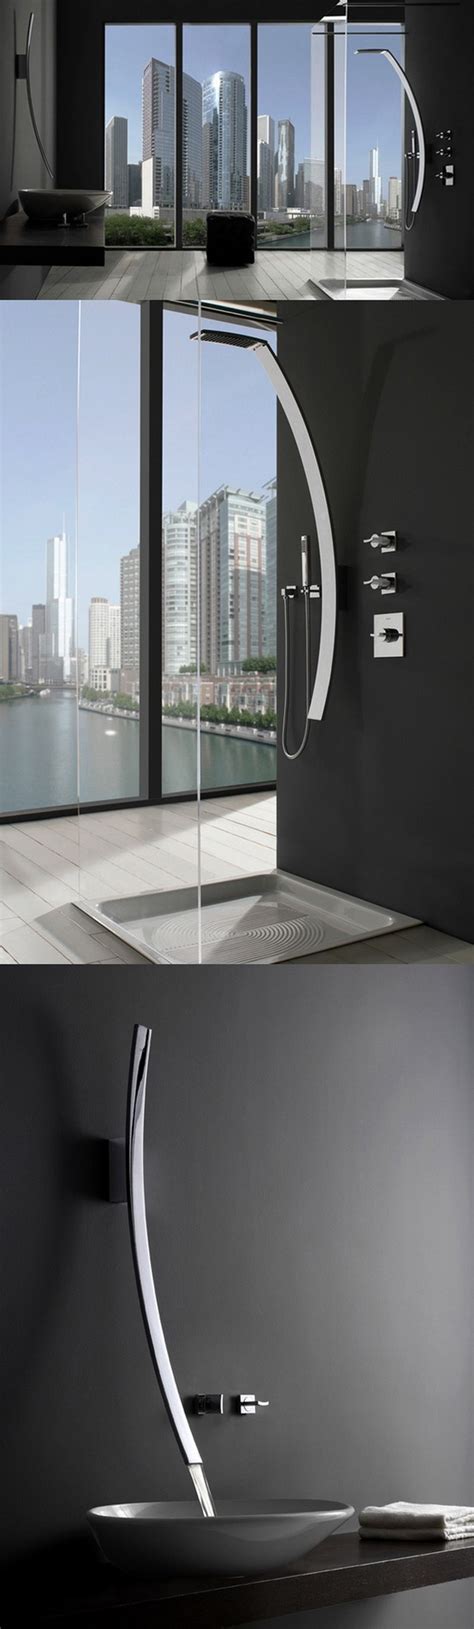 strong masculine bathroom decor ideas inspiration